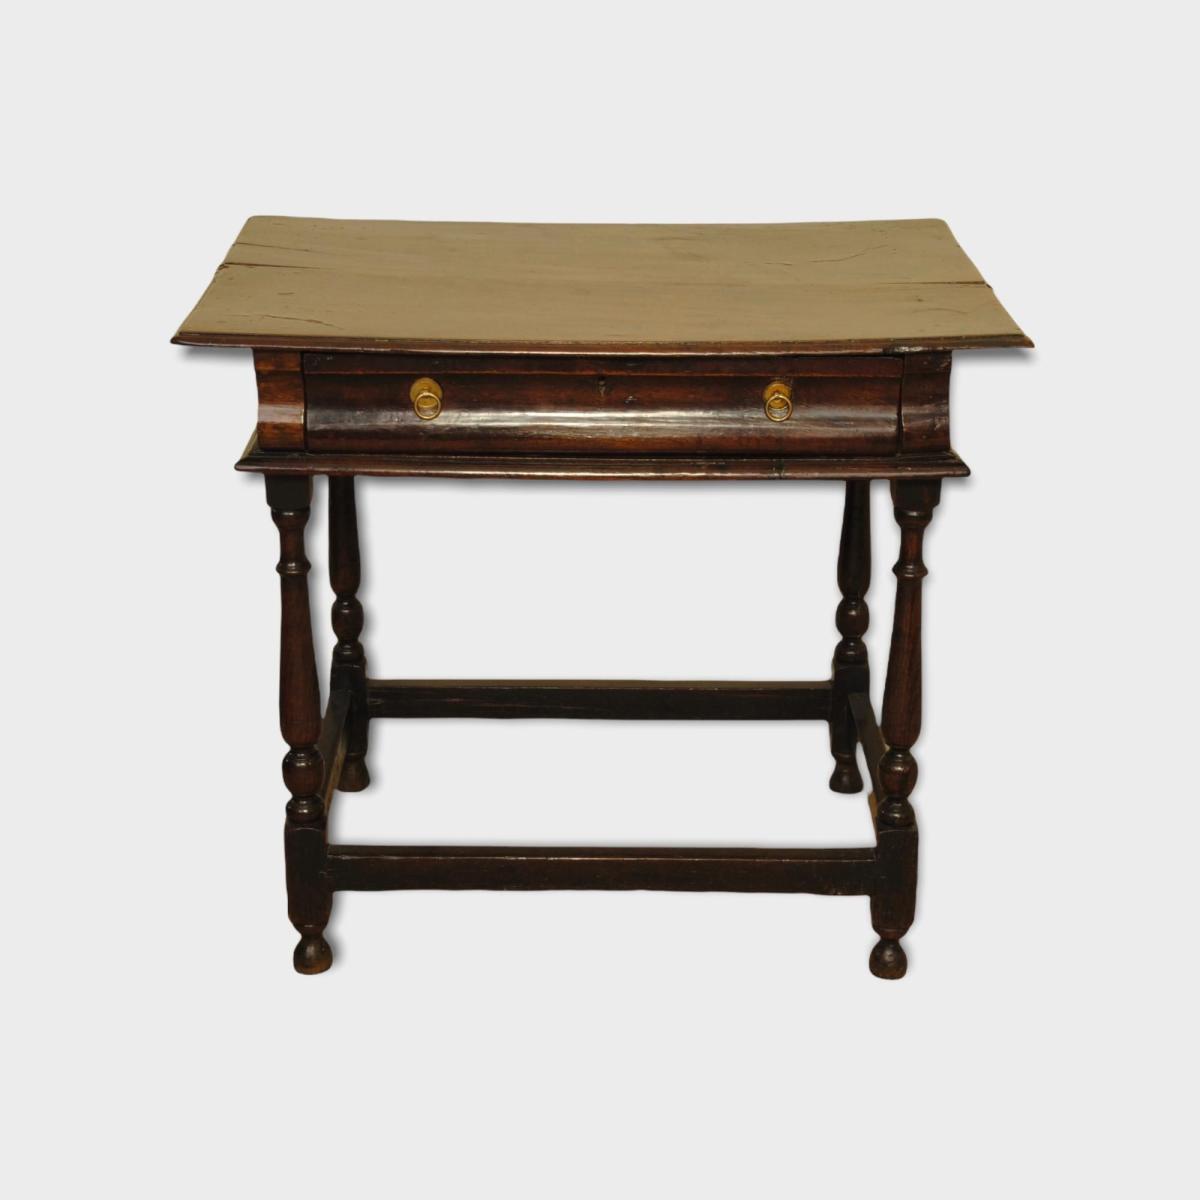 A Late 17th Century Oak Side Table